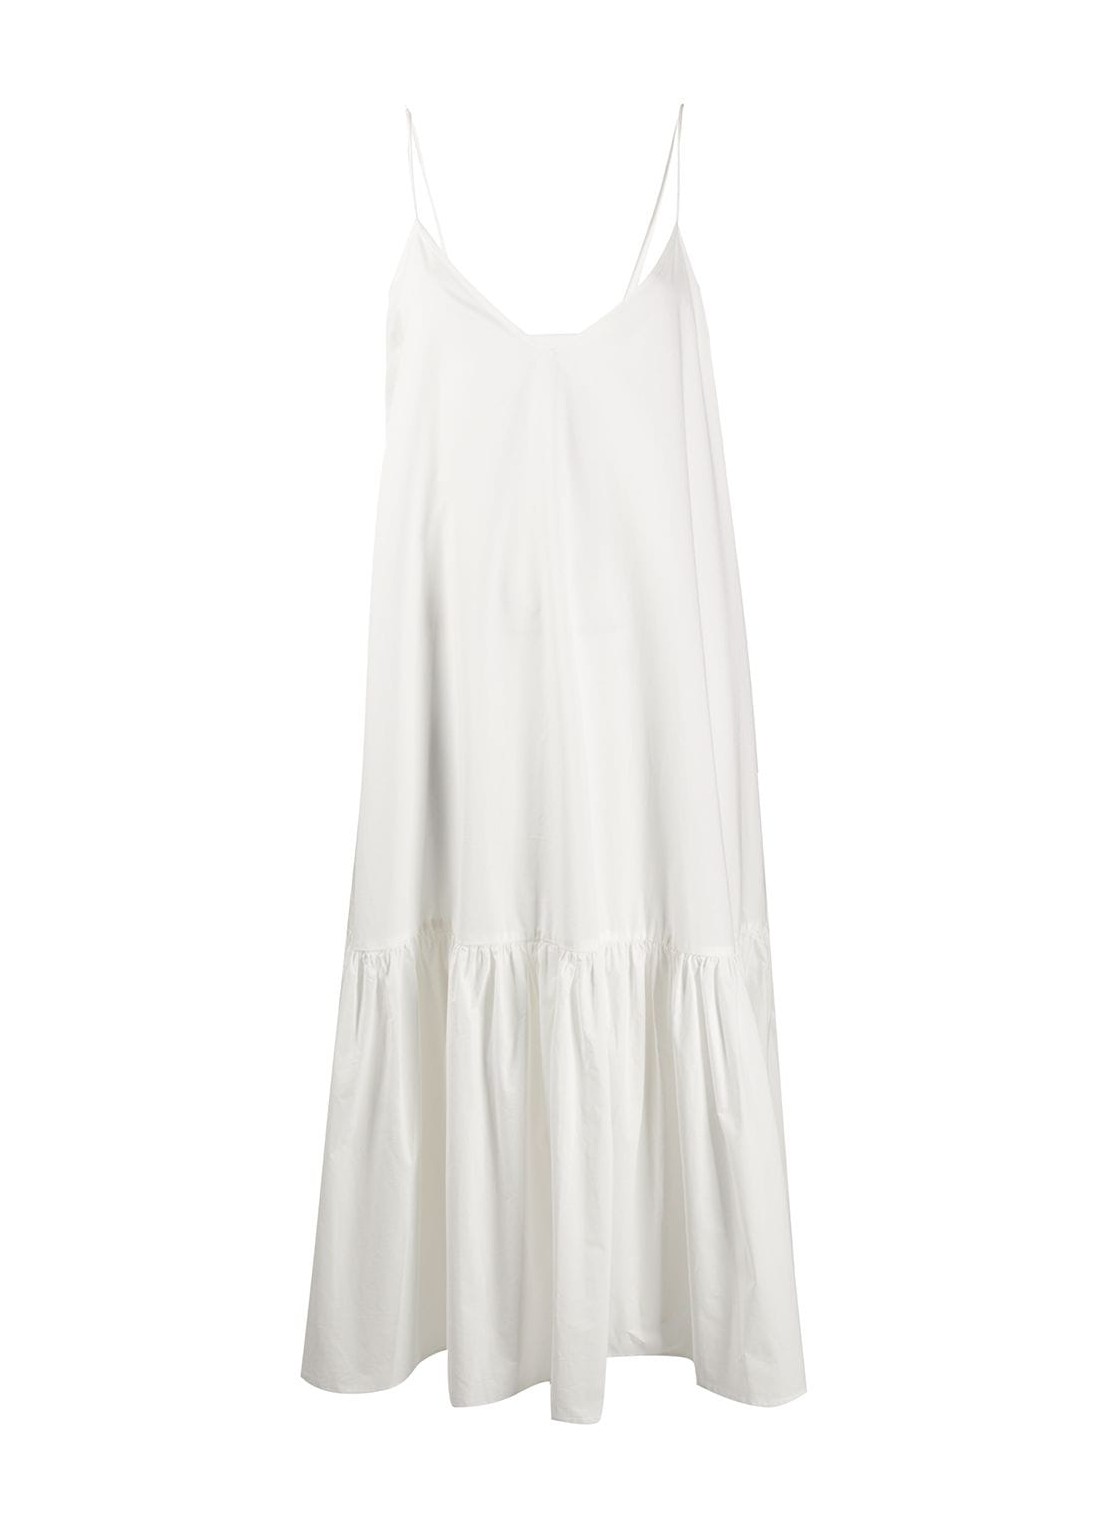 Vestido anine bing dress woman averie dress a021129100 white talla S
 